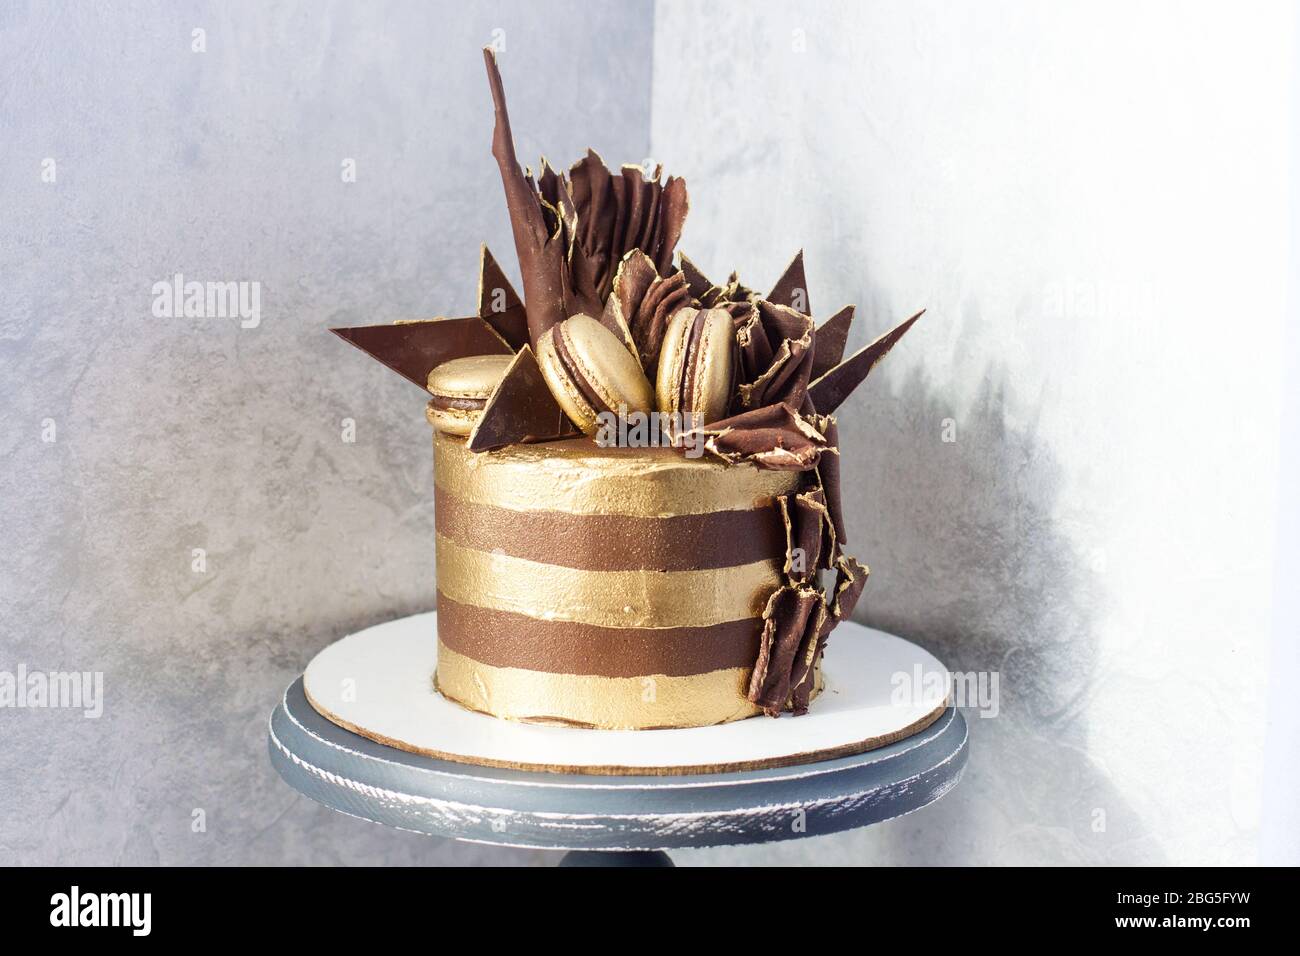 Chocolate birthday cake with golden stripes, dark chocolate ...